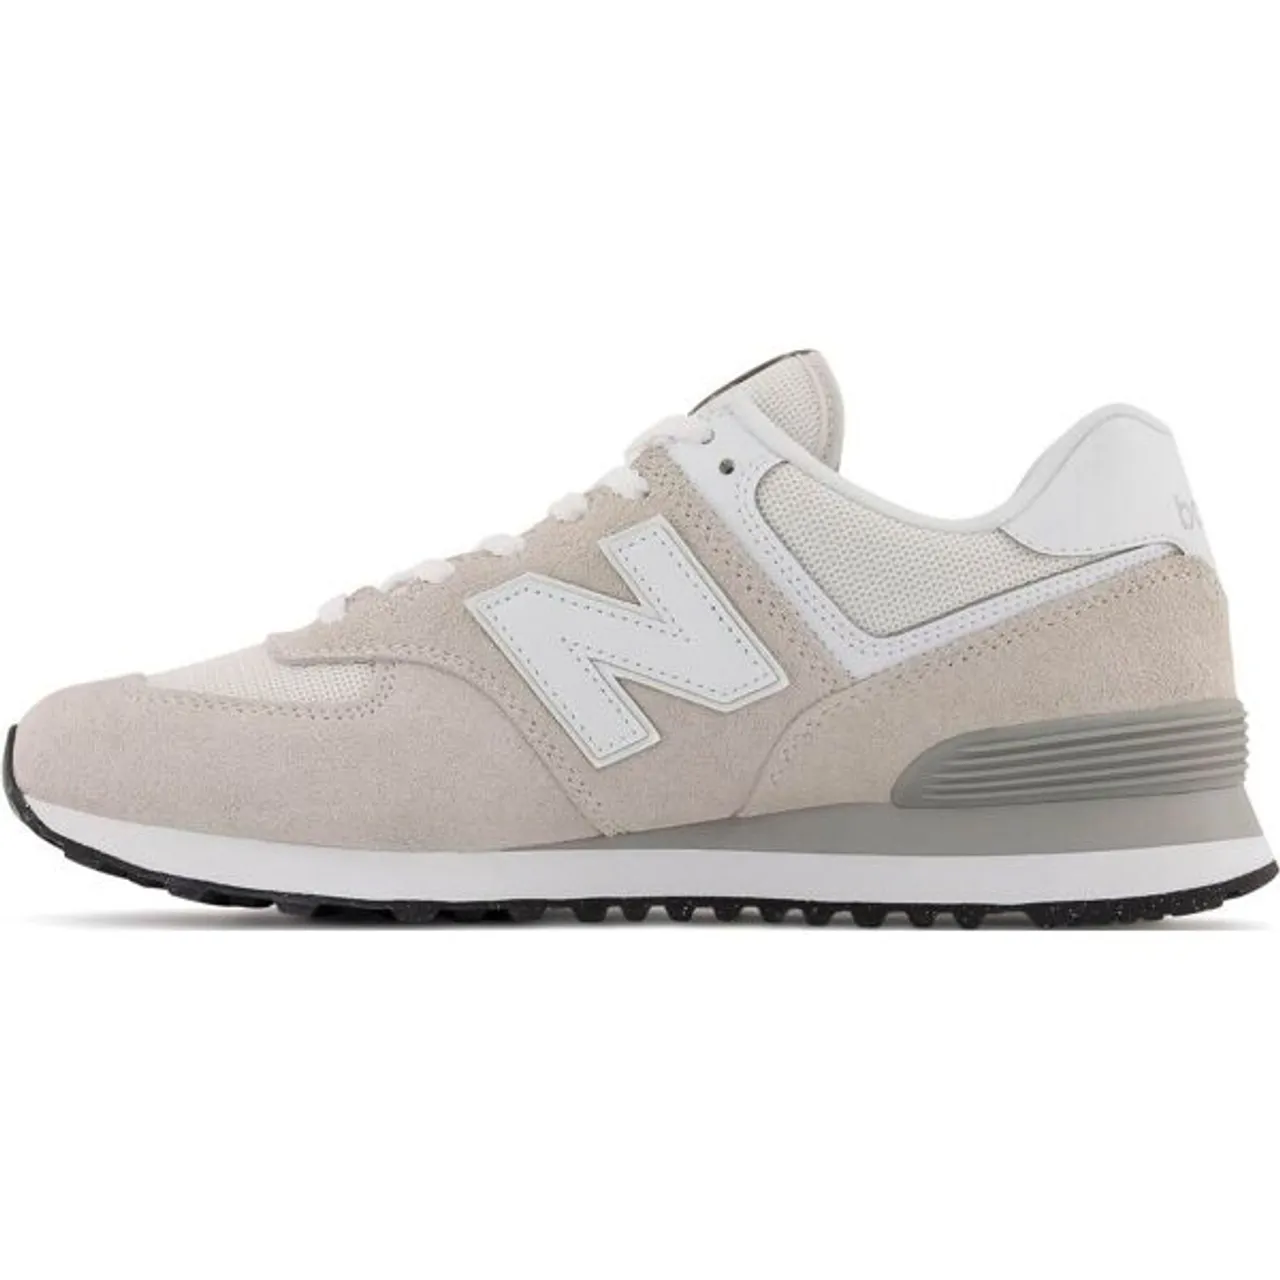 Sneaker NEW BALANCE "ML574 Core" Gr. 42,5, beige (hellbeige, weiß) Schuhe New Balance